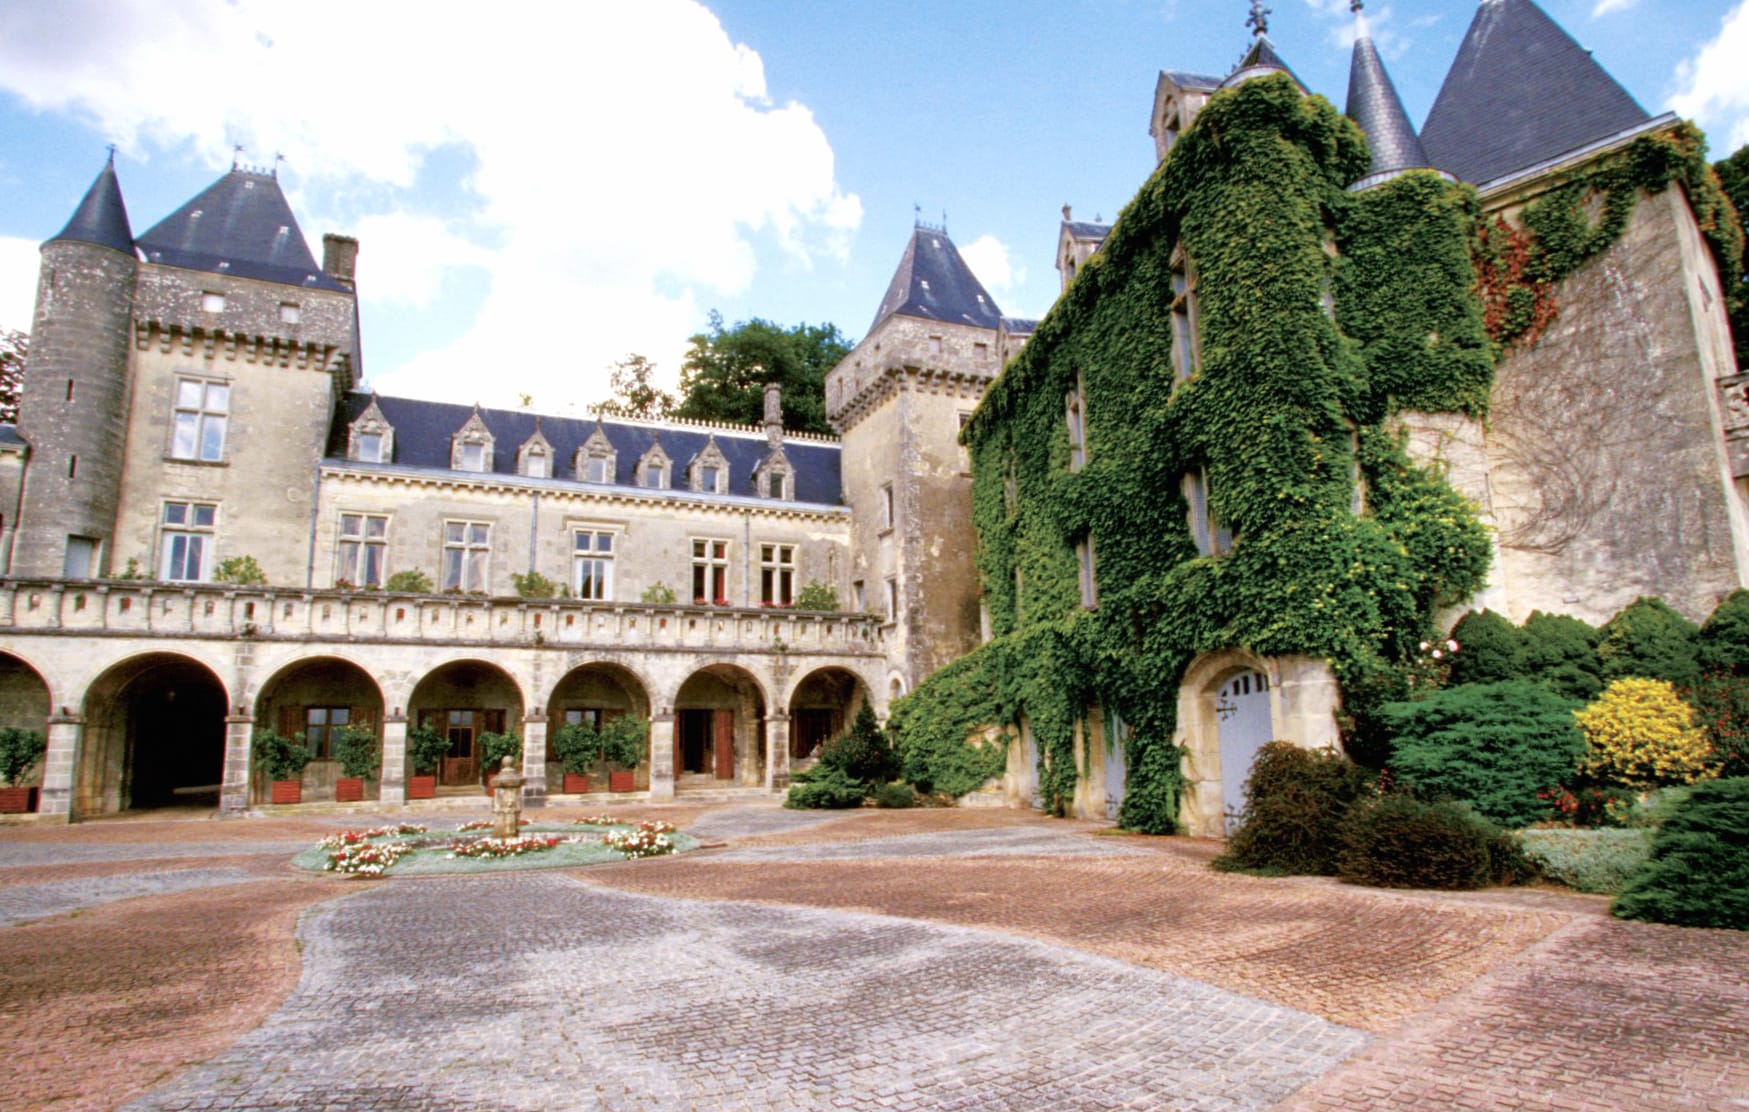 Chateau de La Riviere-Bourdet at 1280 x 960 size wallpapers HD quality